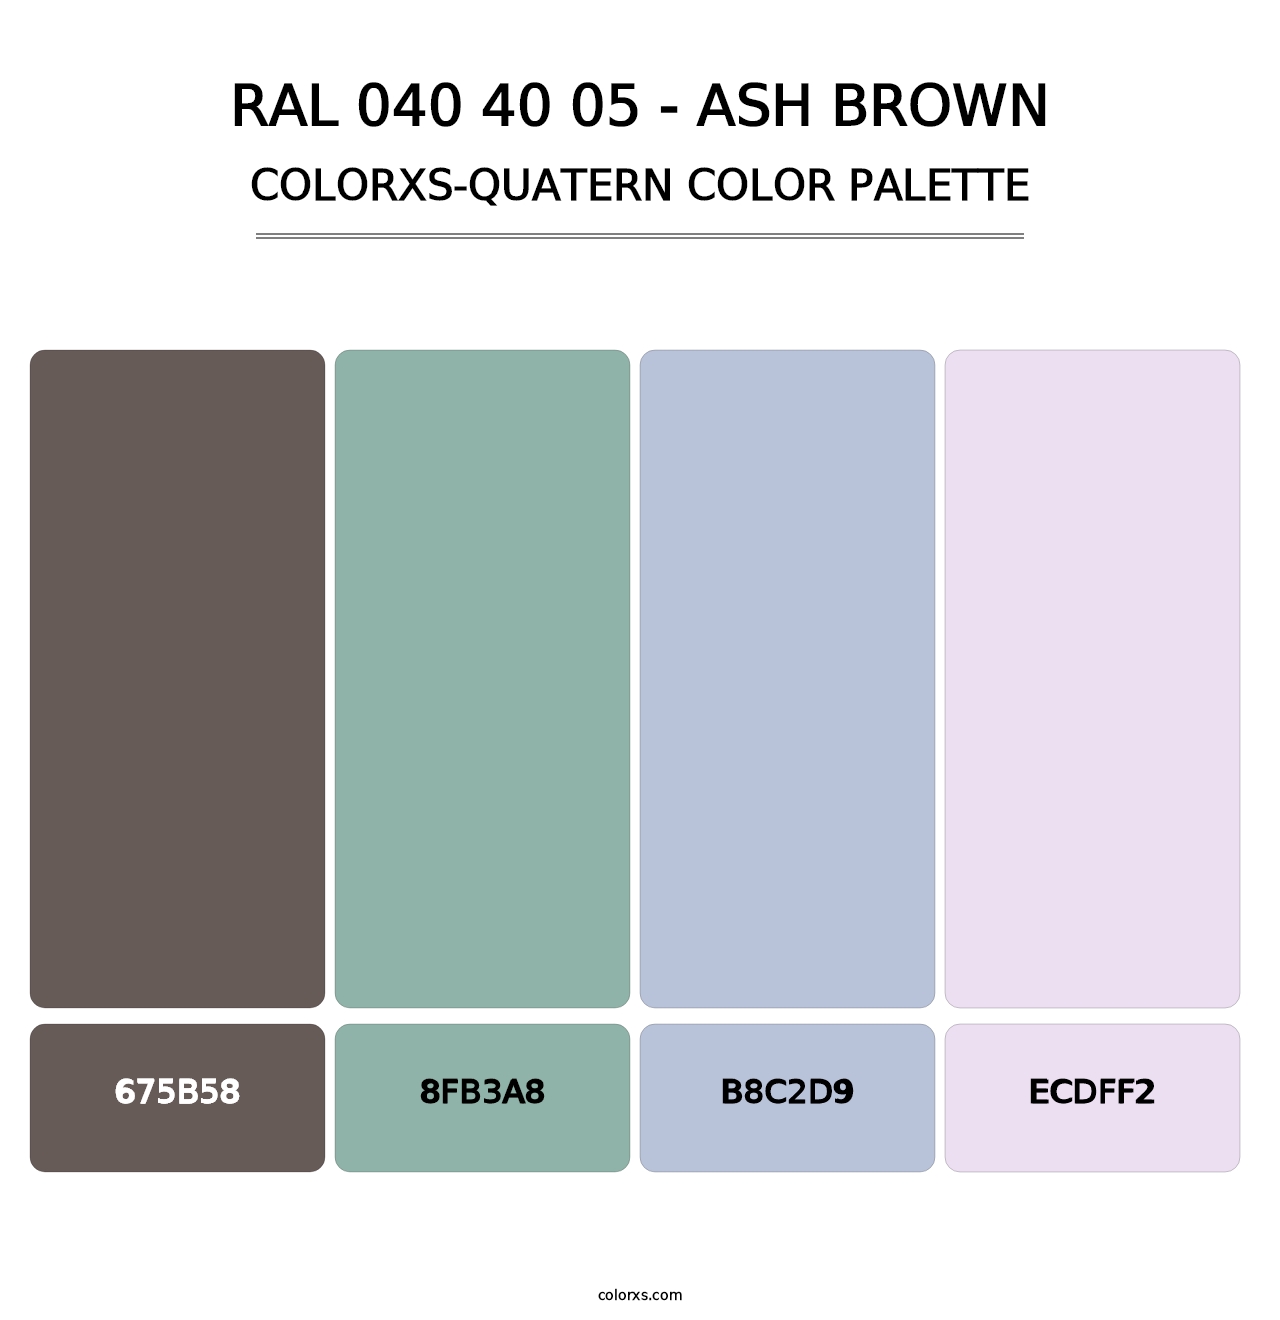 RAL 040 40 05 - Ash Brown - Colorxs Quatern Palette